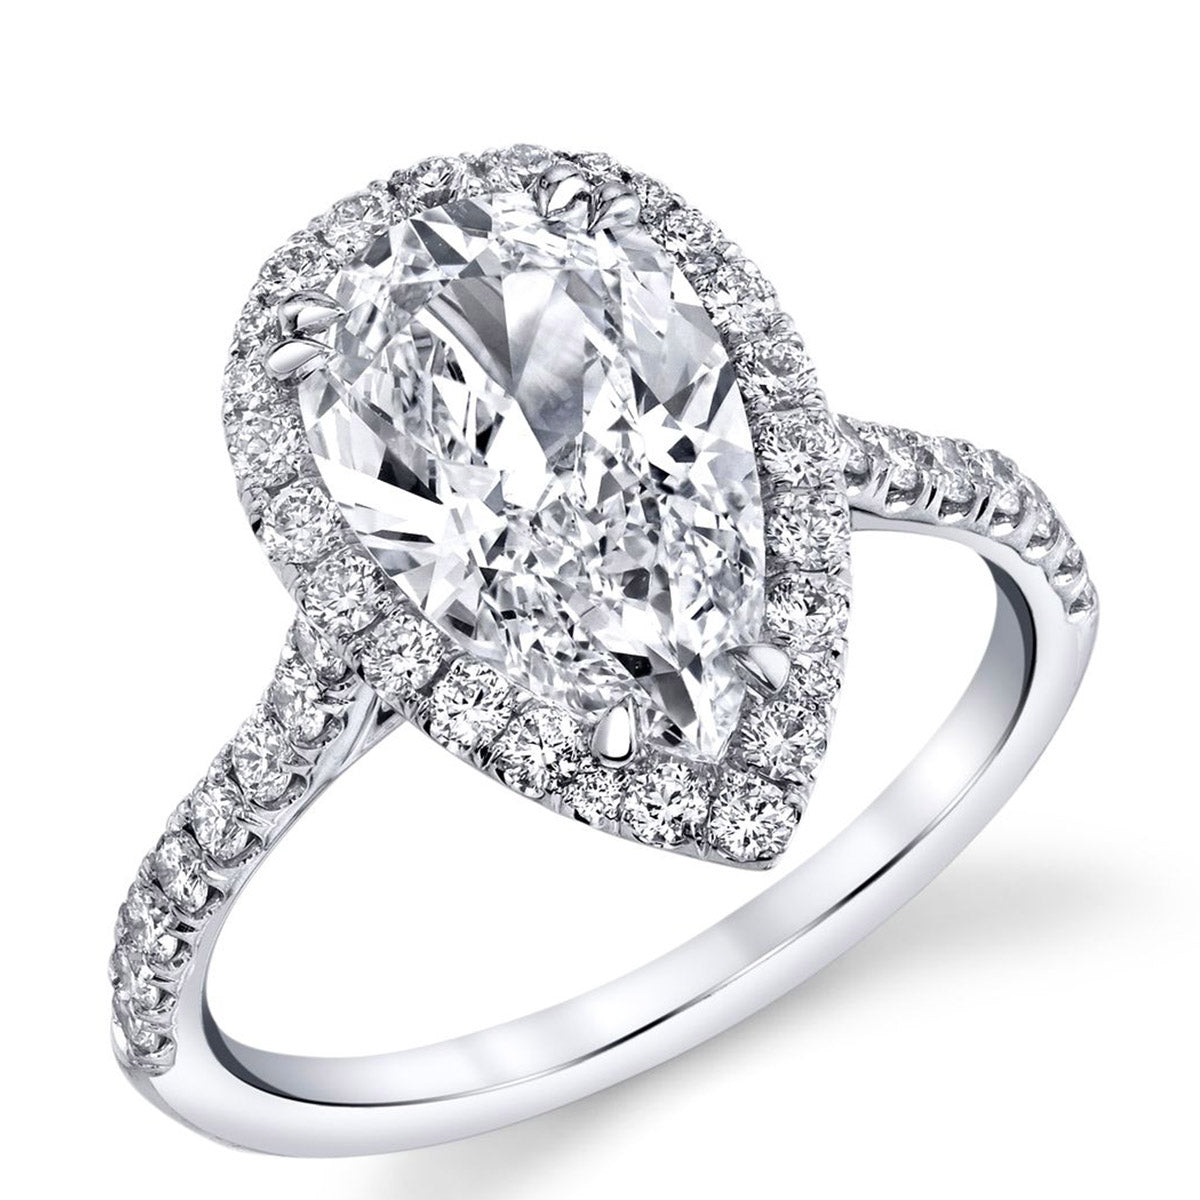 Pear cut diamond engagement rings by Monroe Yorke Diamonds